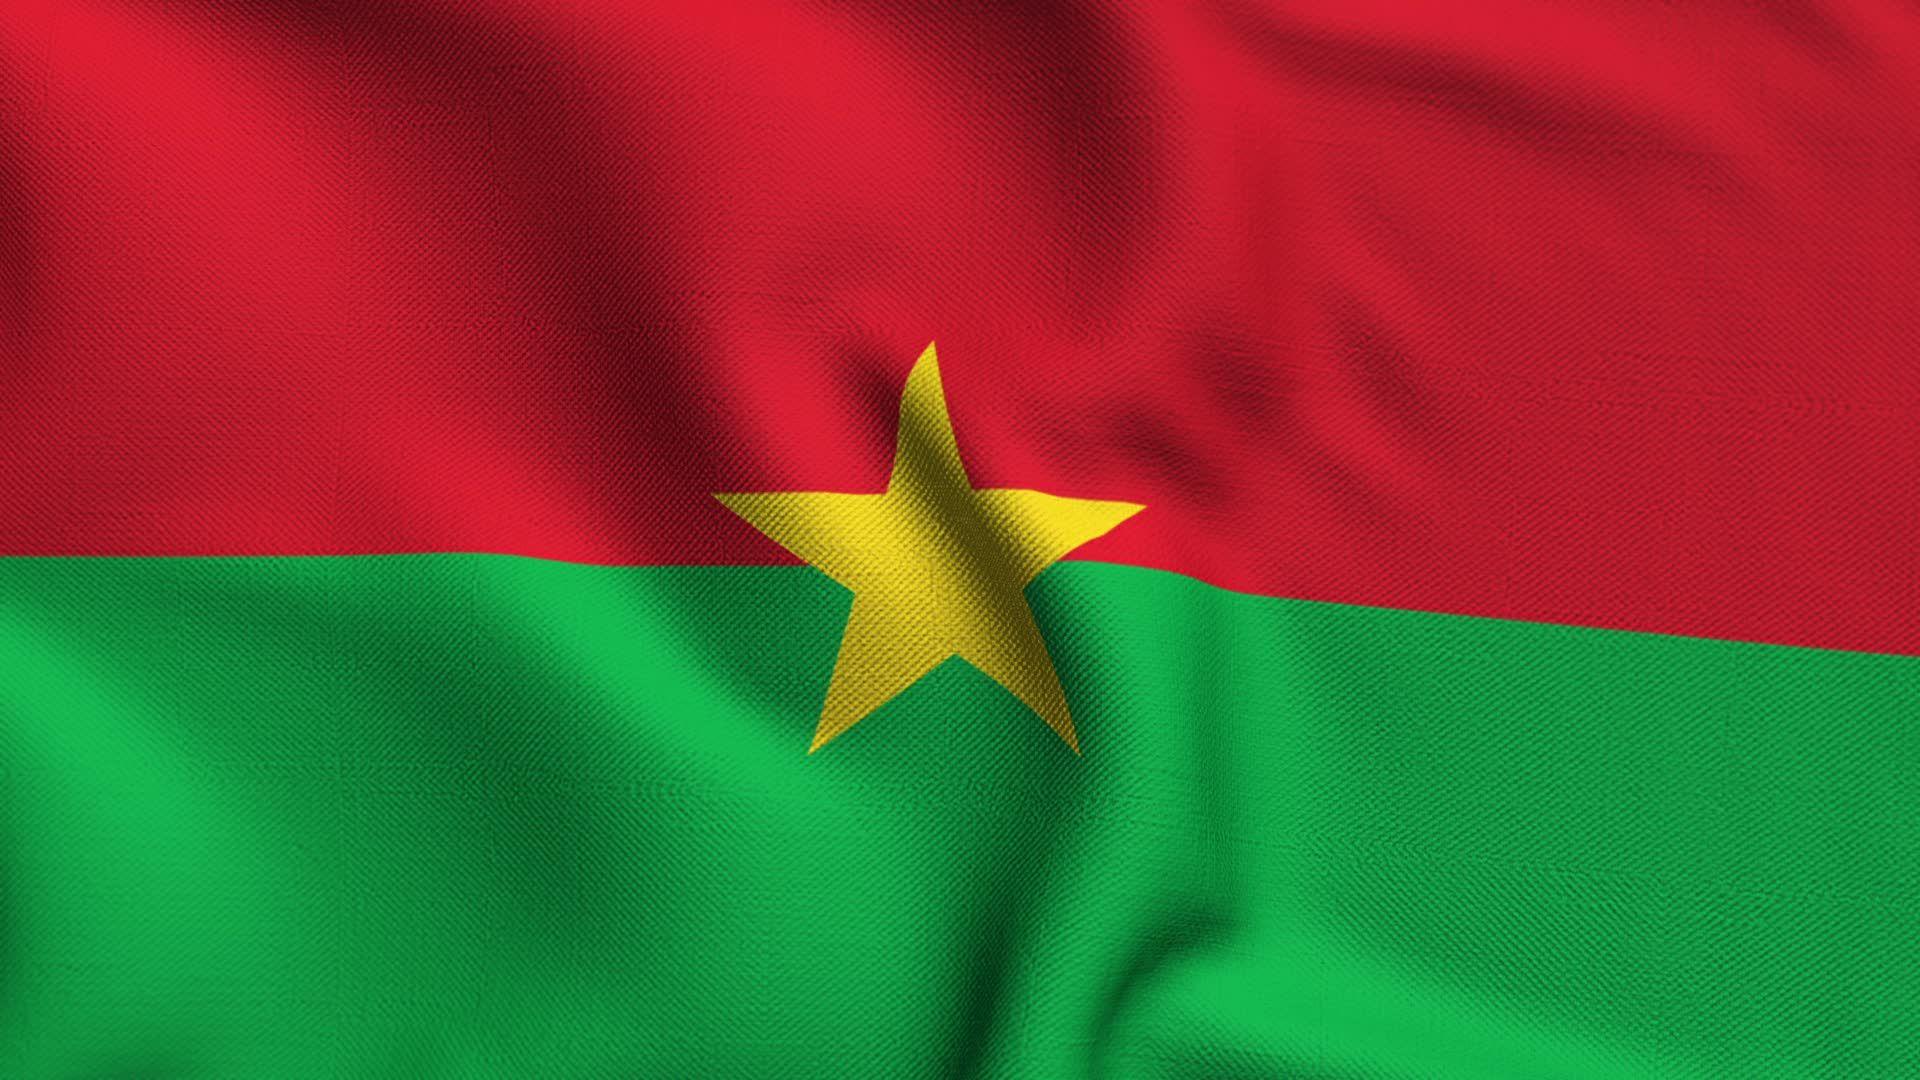 Video: Burkina Faso Weave Textured Flag Loop